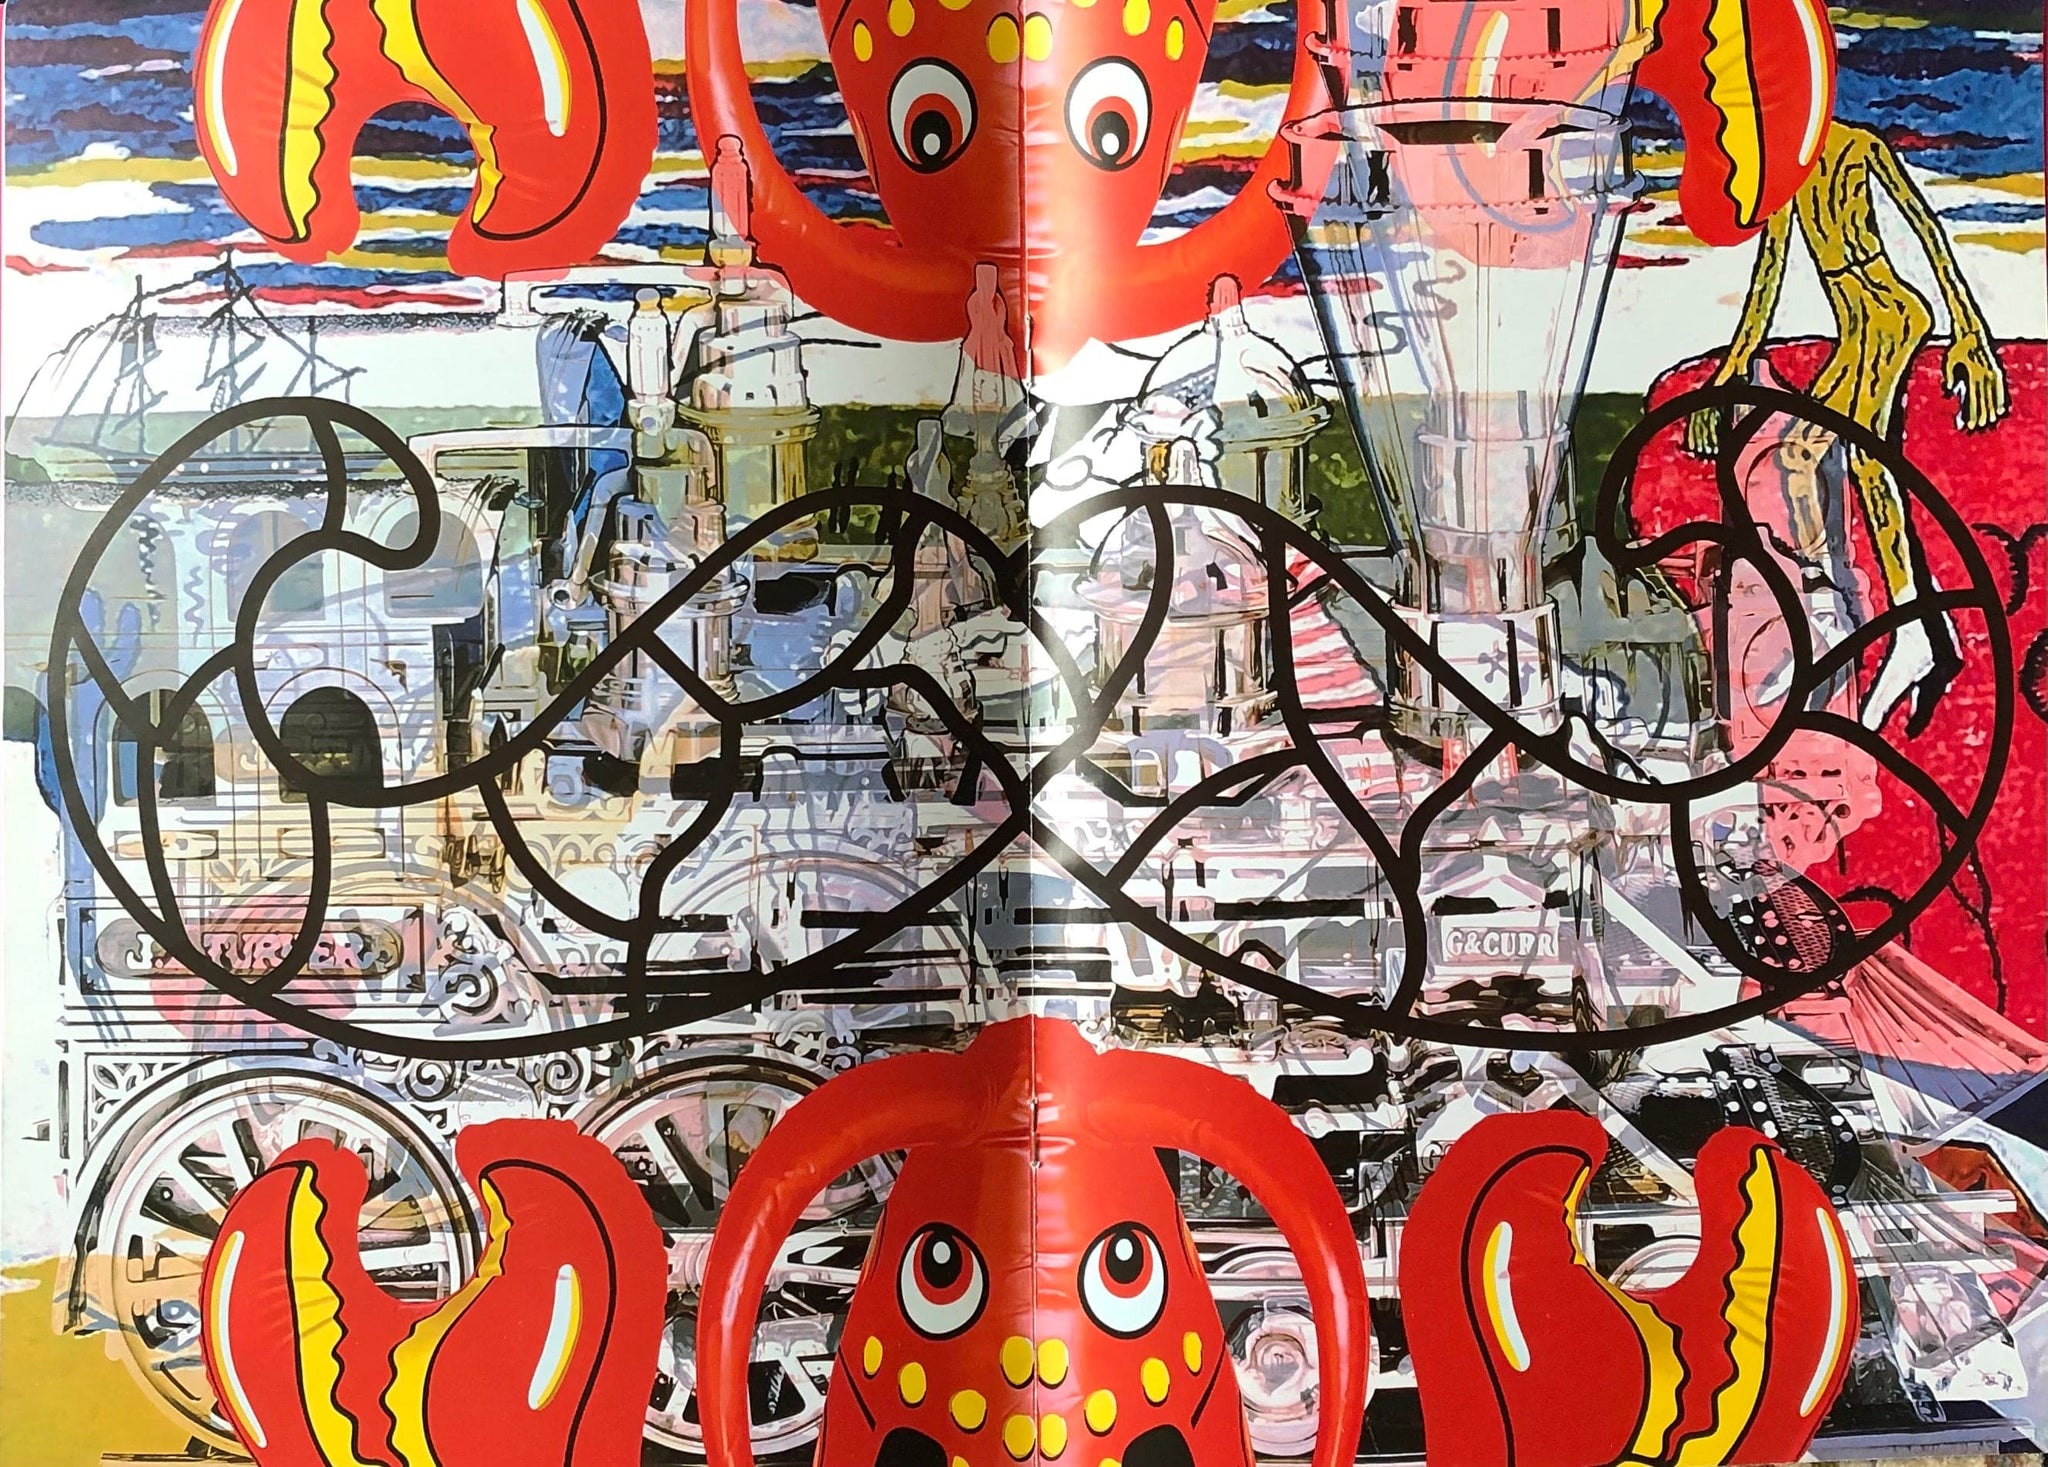 Jeff Koons - Serpentine Gallery Exhibition Guide